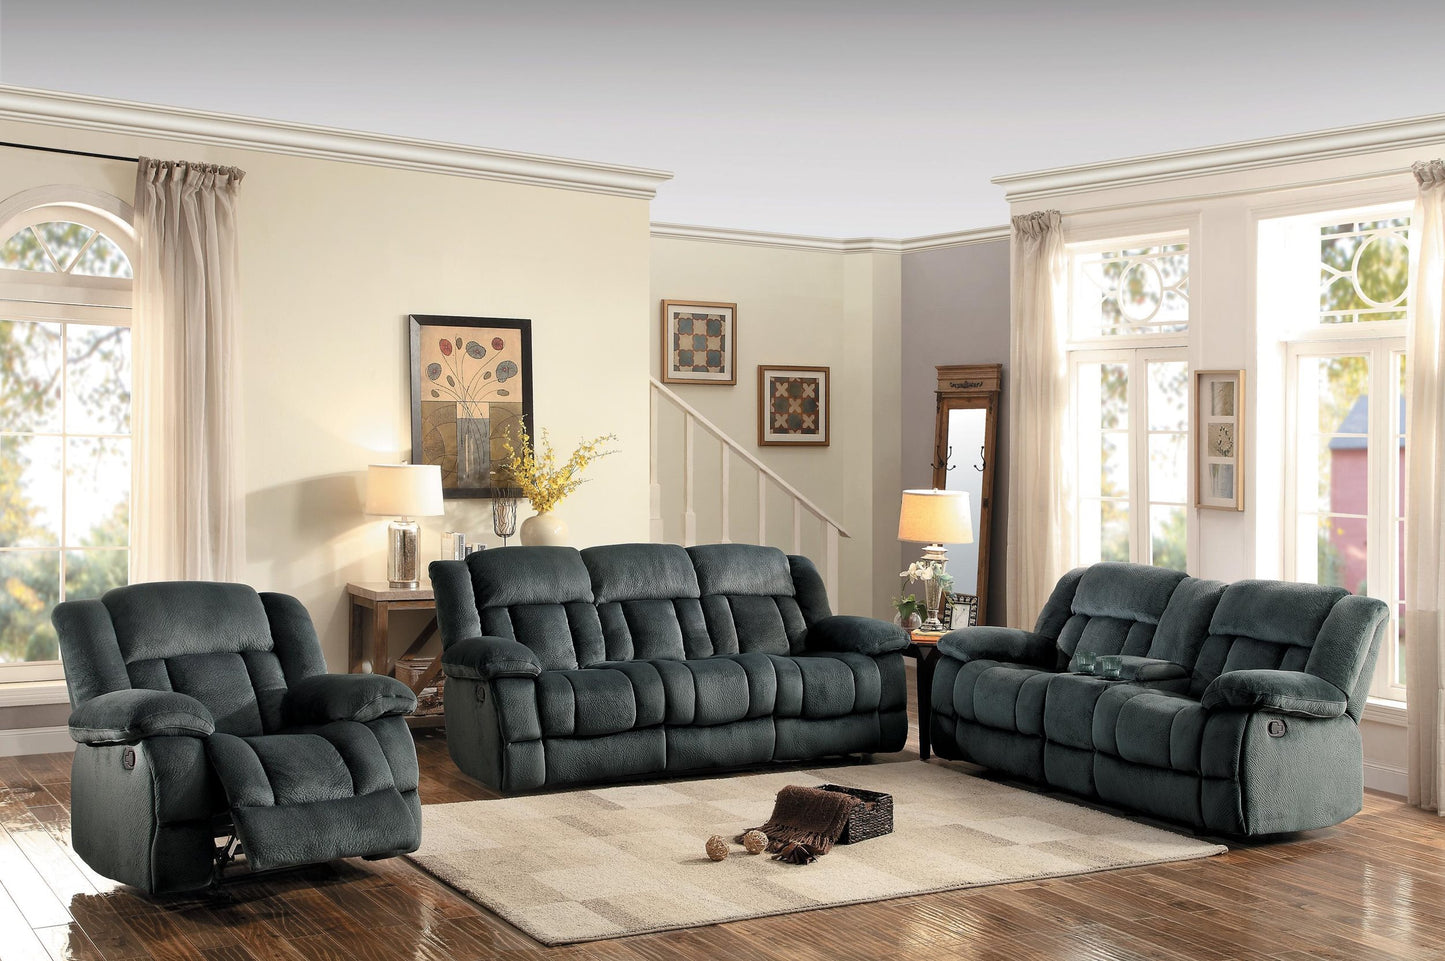 Homelegance Laurelton Double Reclining Sofa in Microfiber - Charcoal